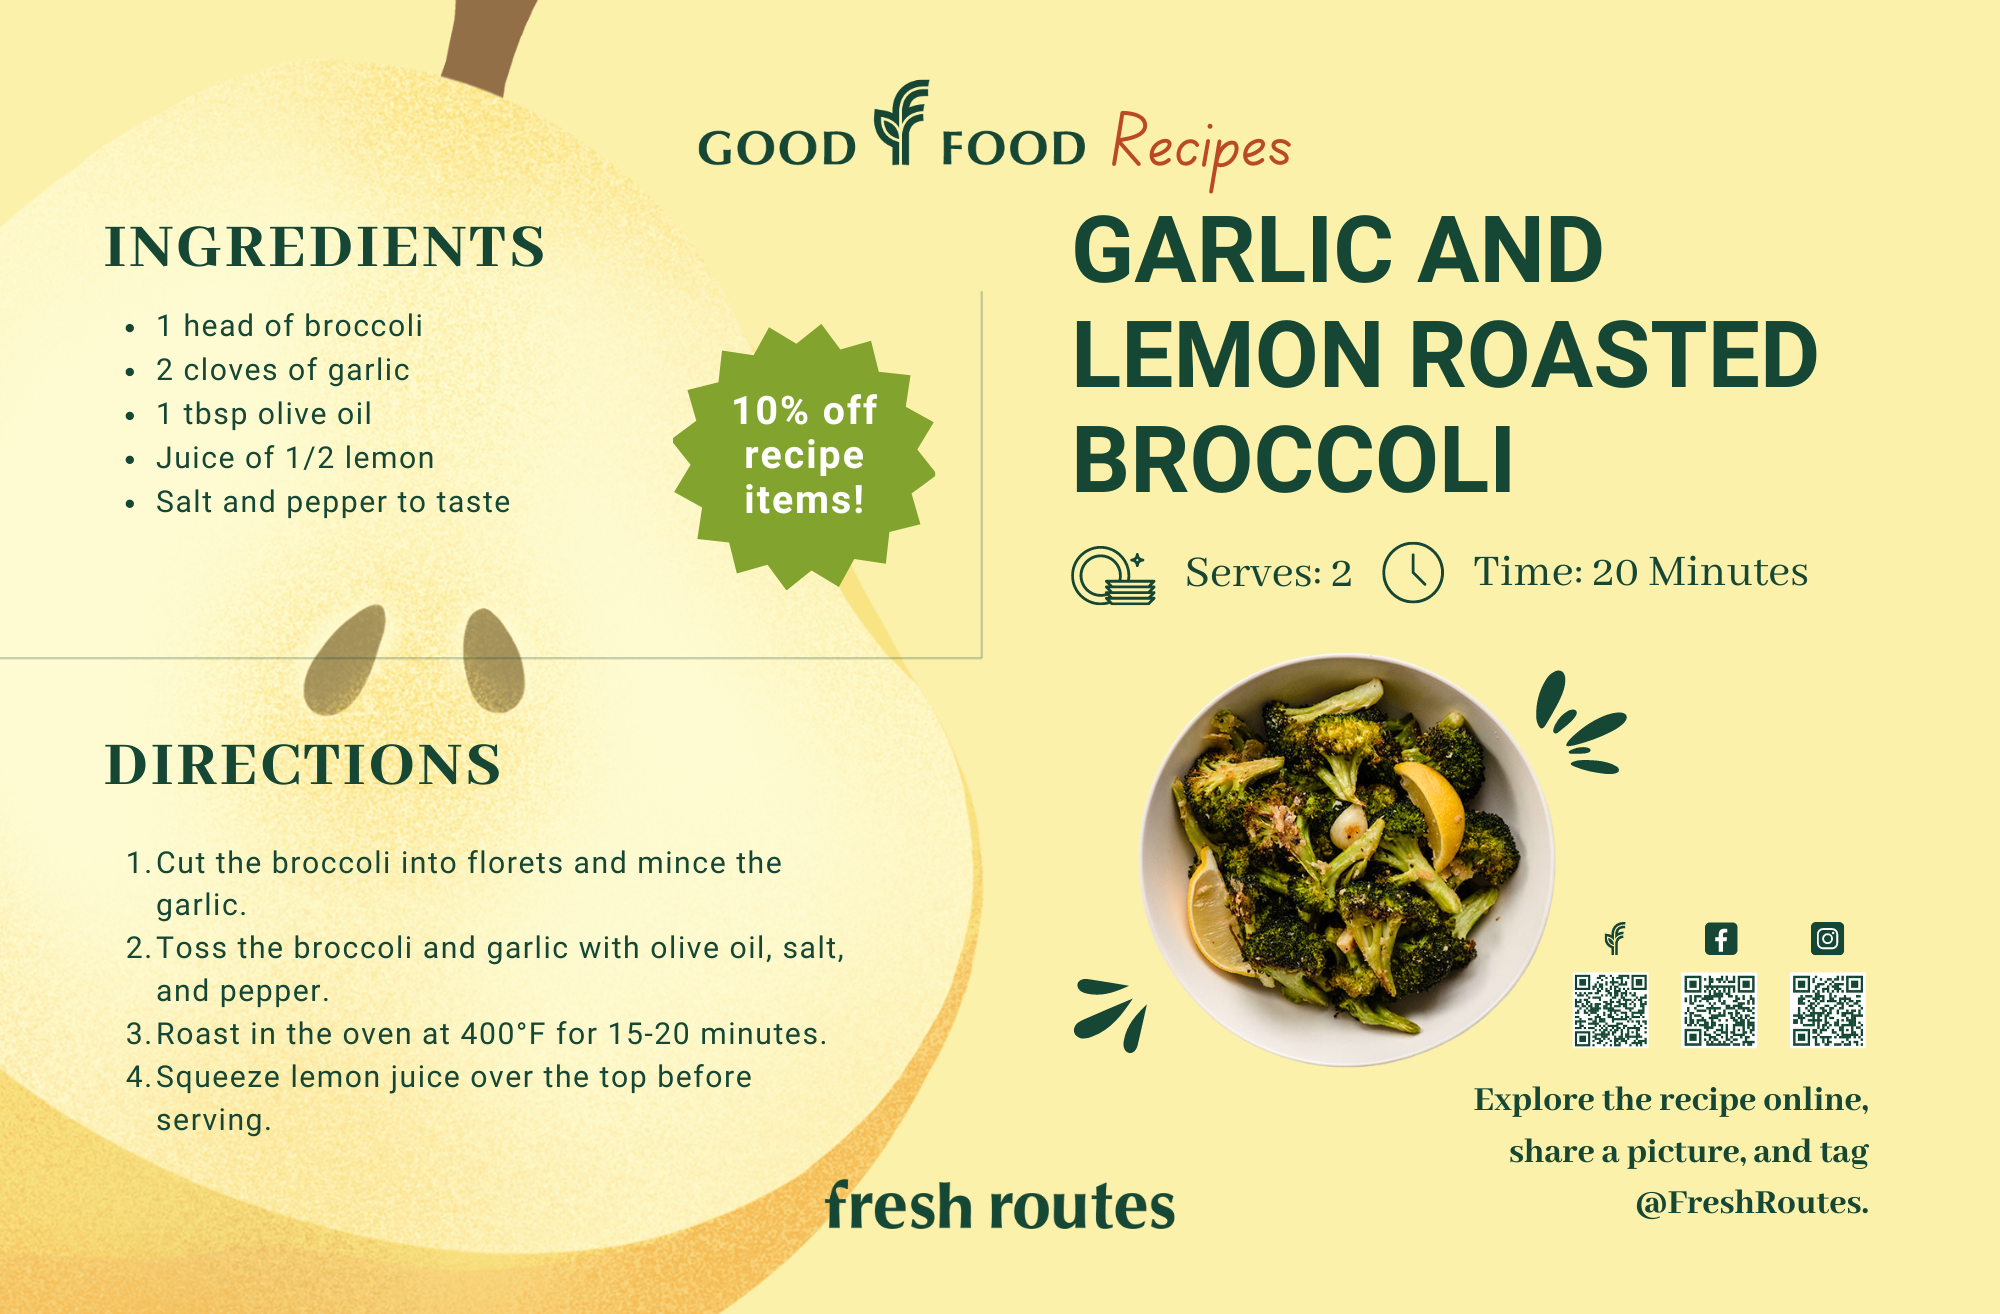 Garlic and Lemon Roasted Broccoli